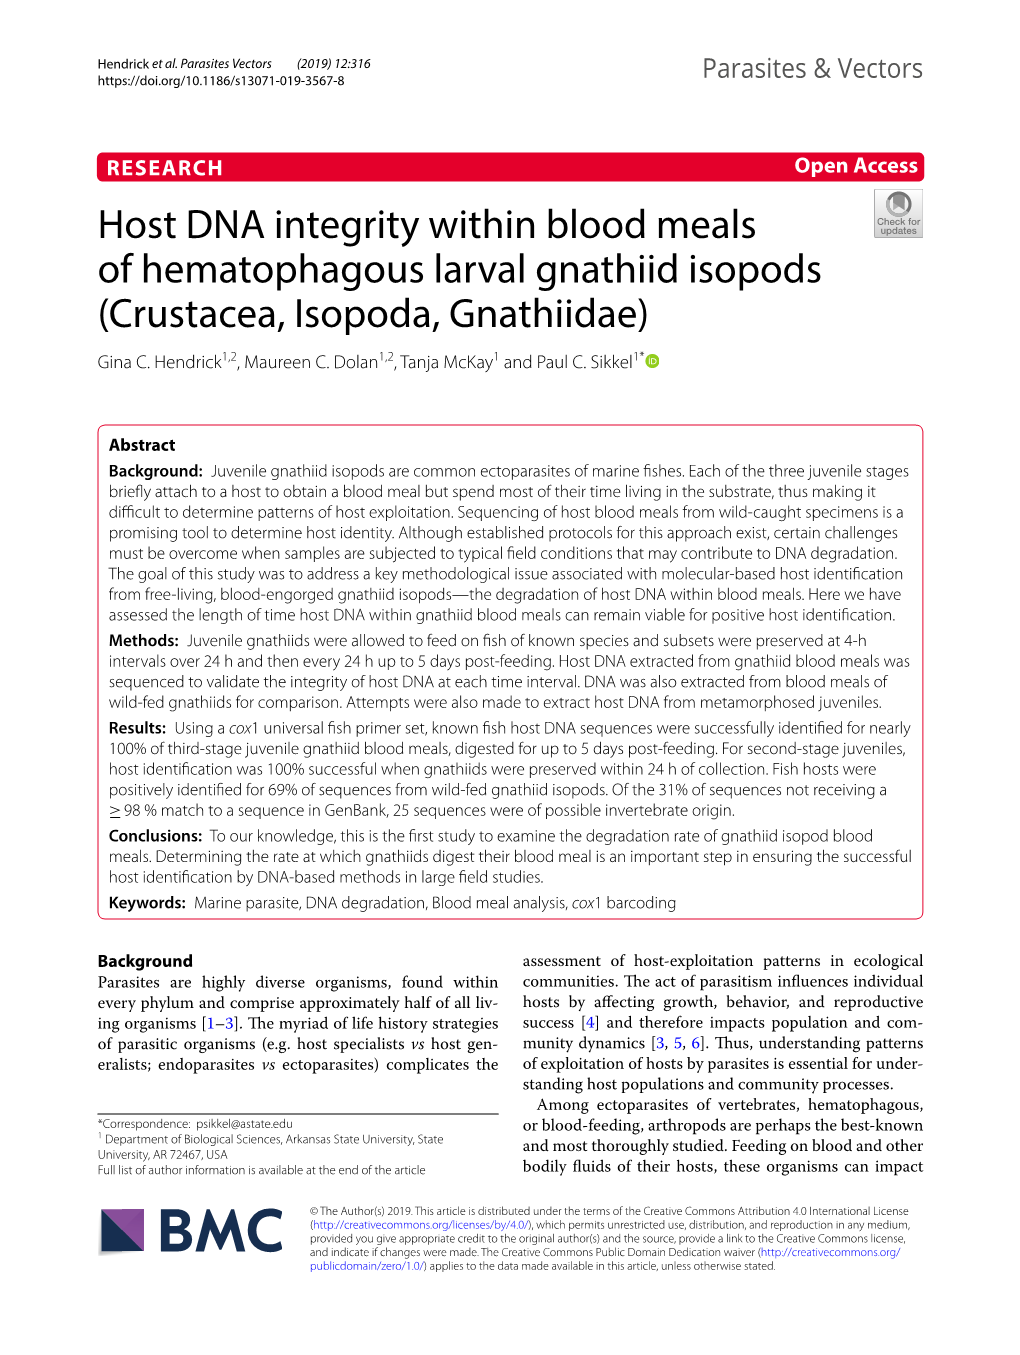 Host DNA Integrity Within Blood Meals of Hematophagous Larval Gnathiid Isopods (Crustacea, Isopoda, Gnathiidae) Gina C